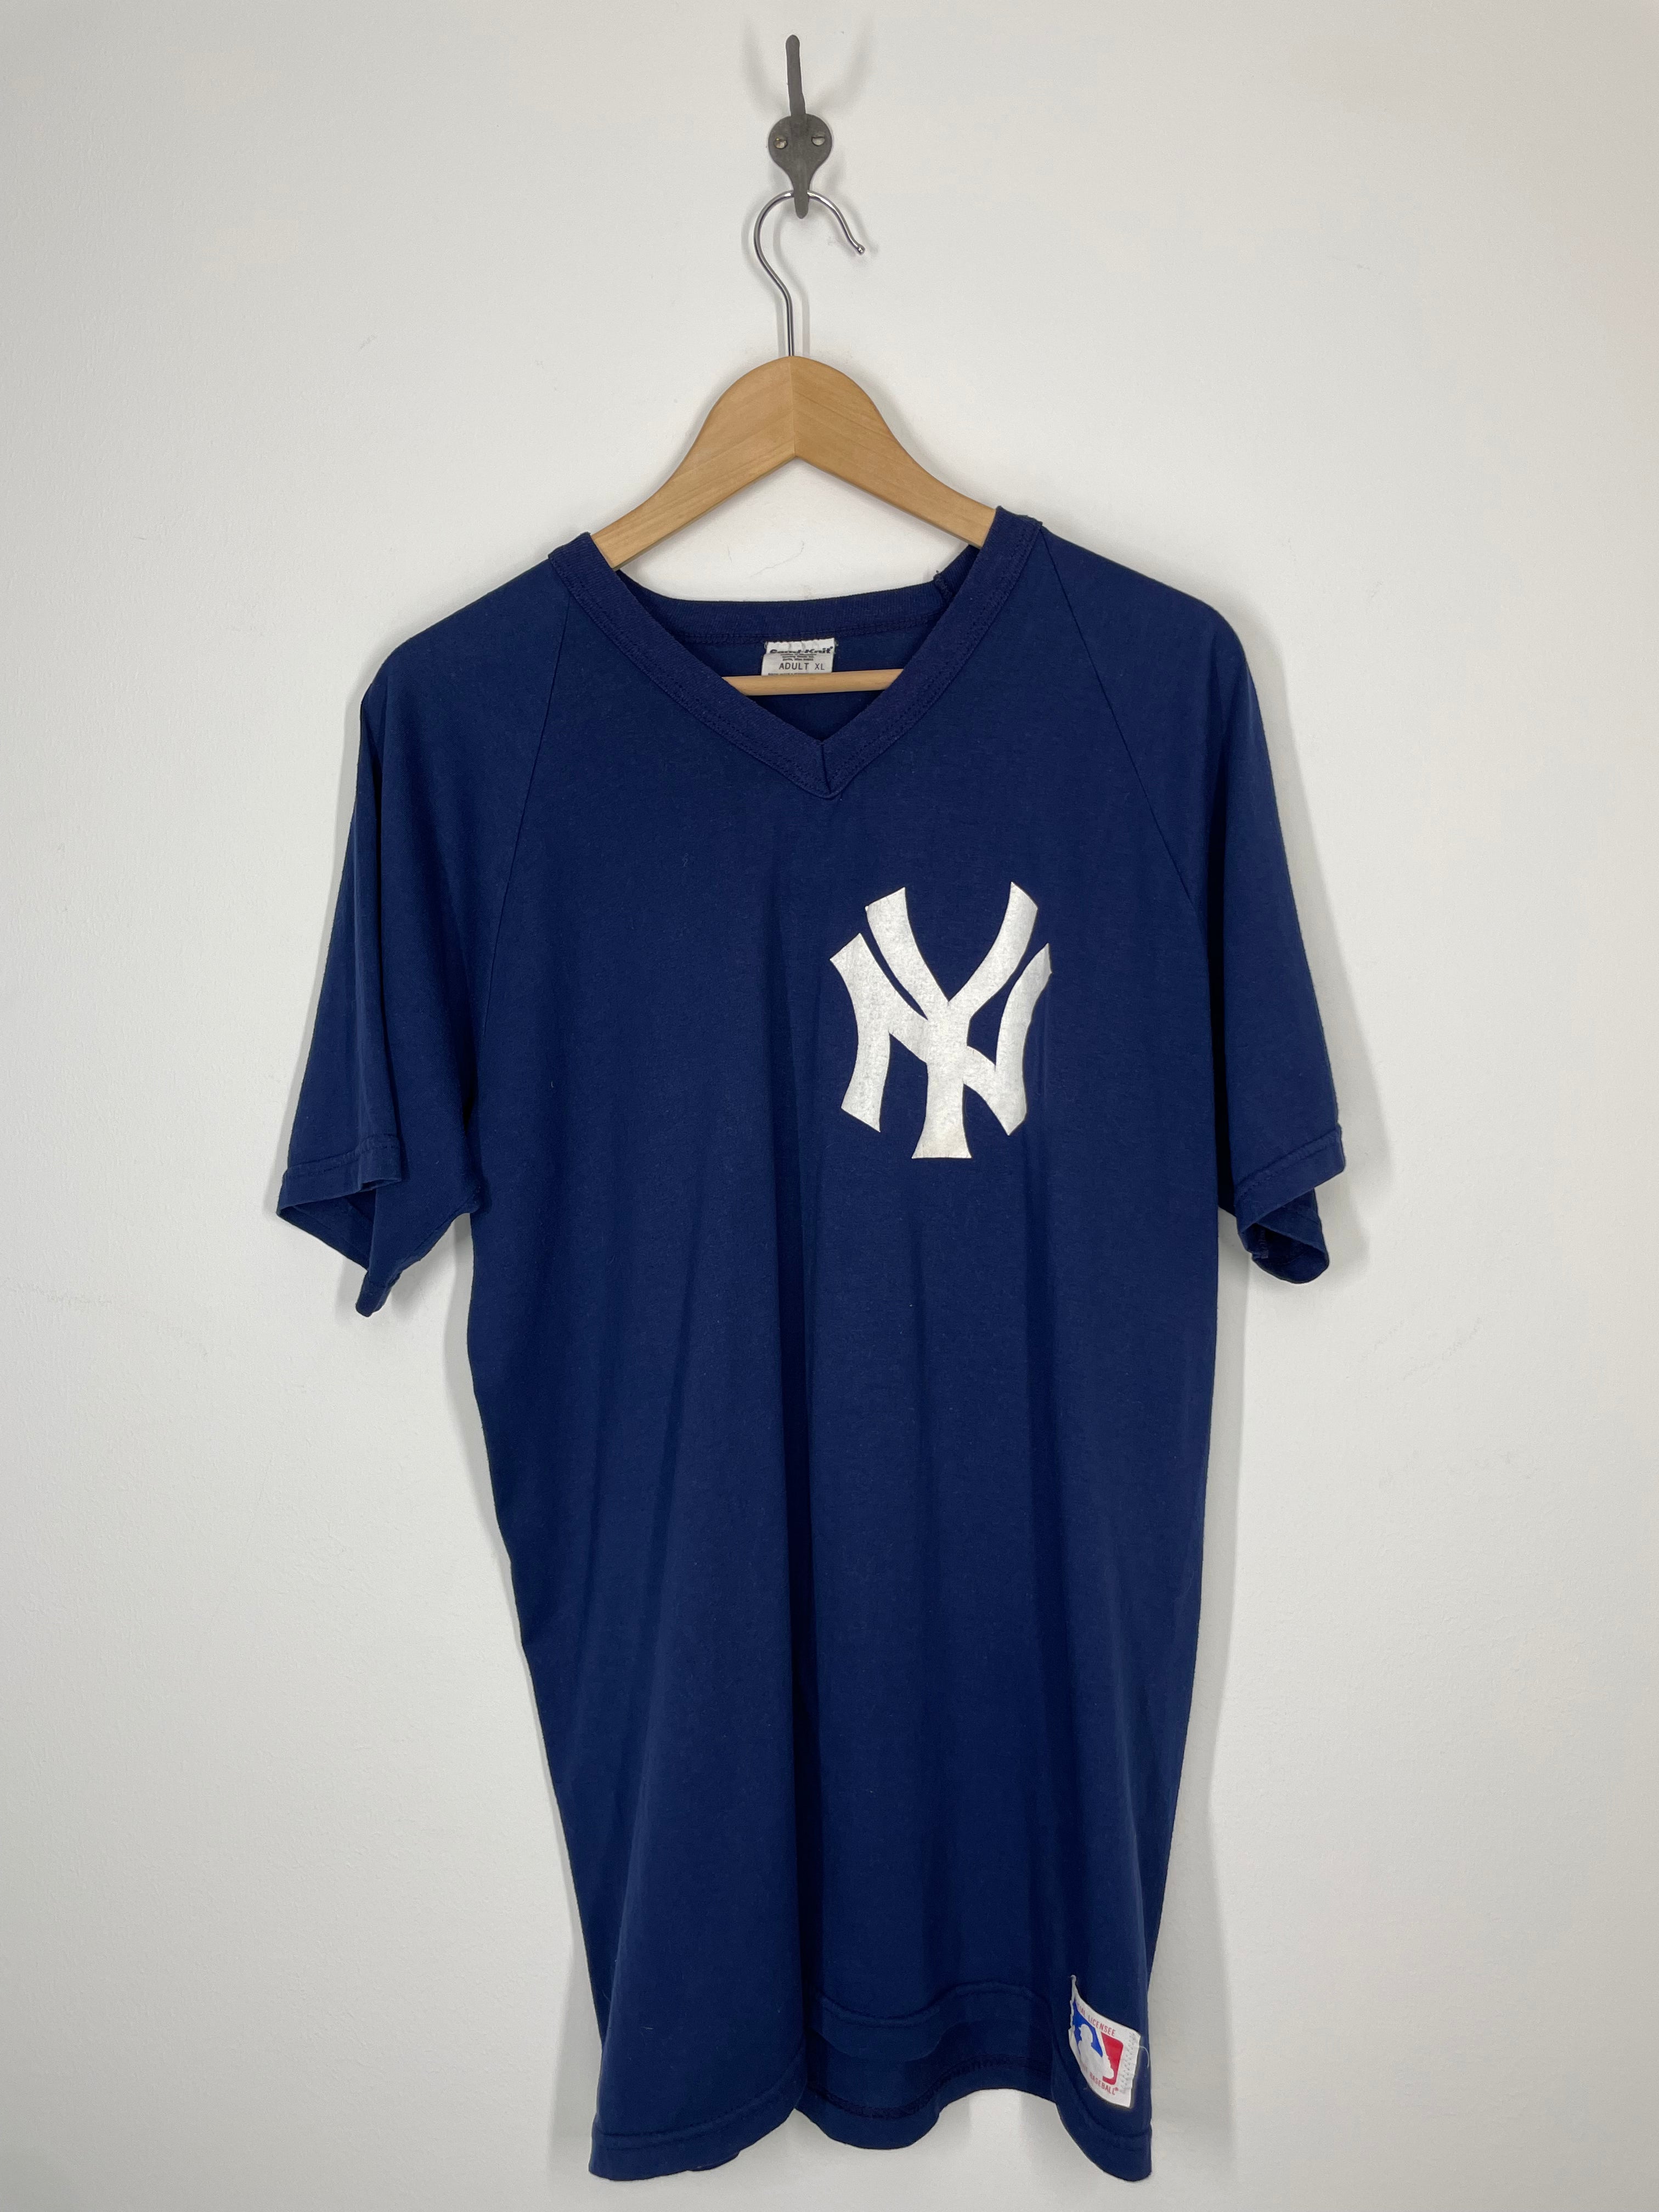 New York Yankees Blue MLB Jerseys for sale